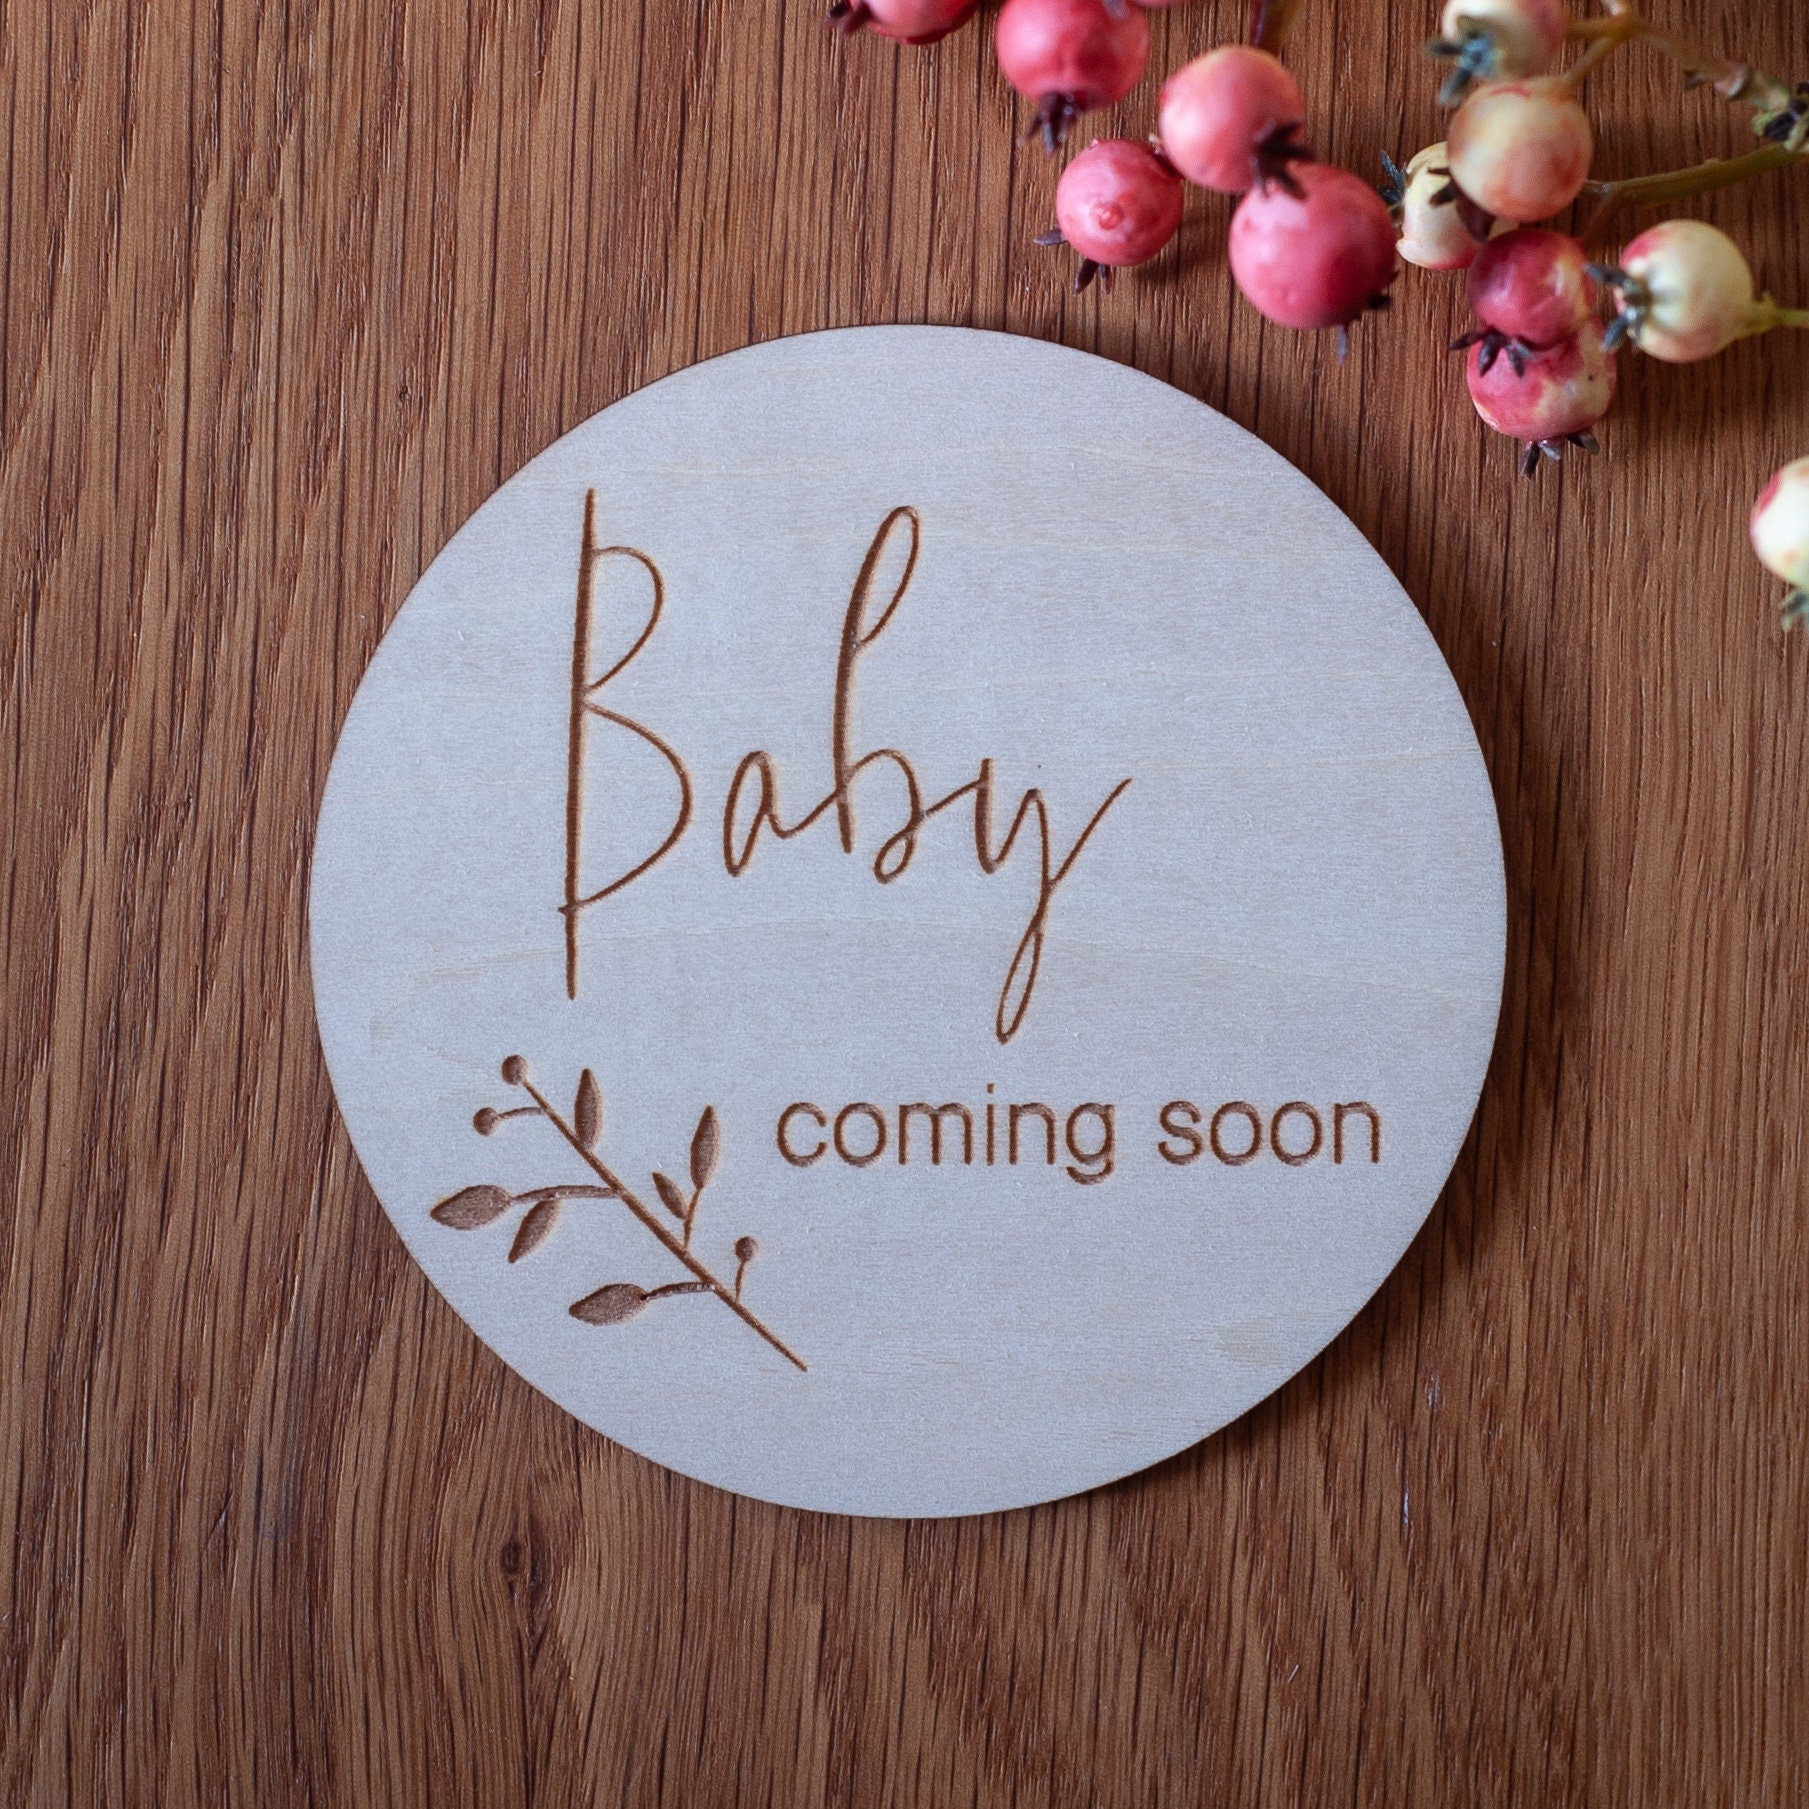 Meilensteinkarte "Baby coming soon"